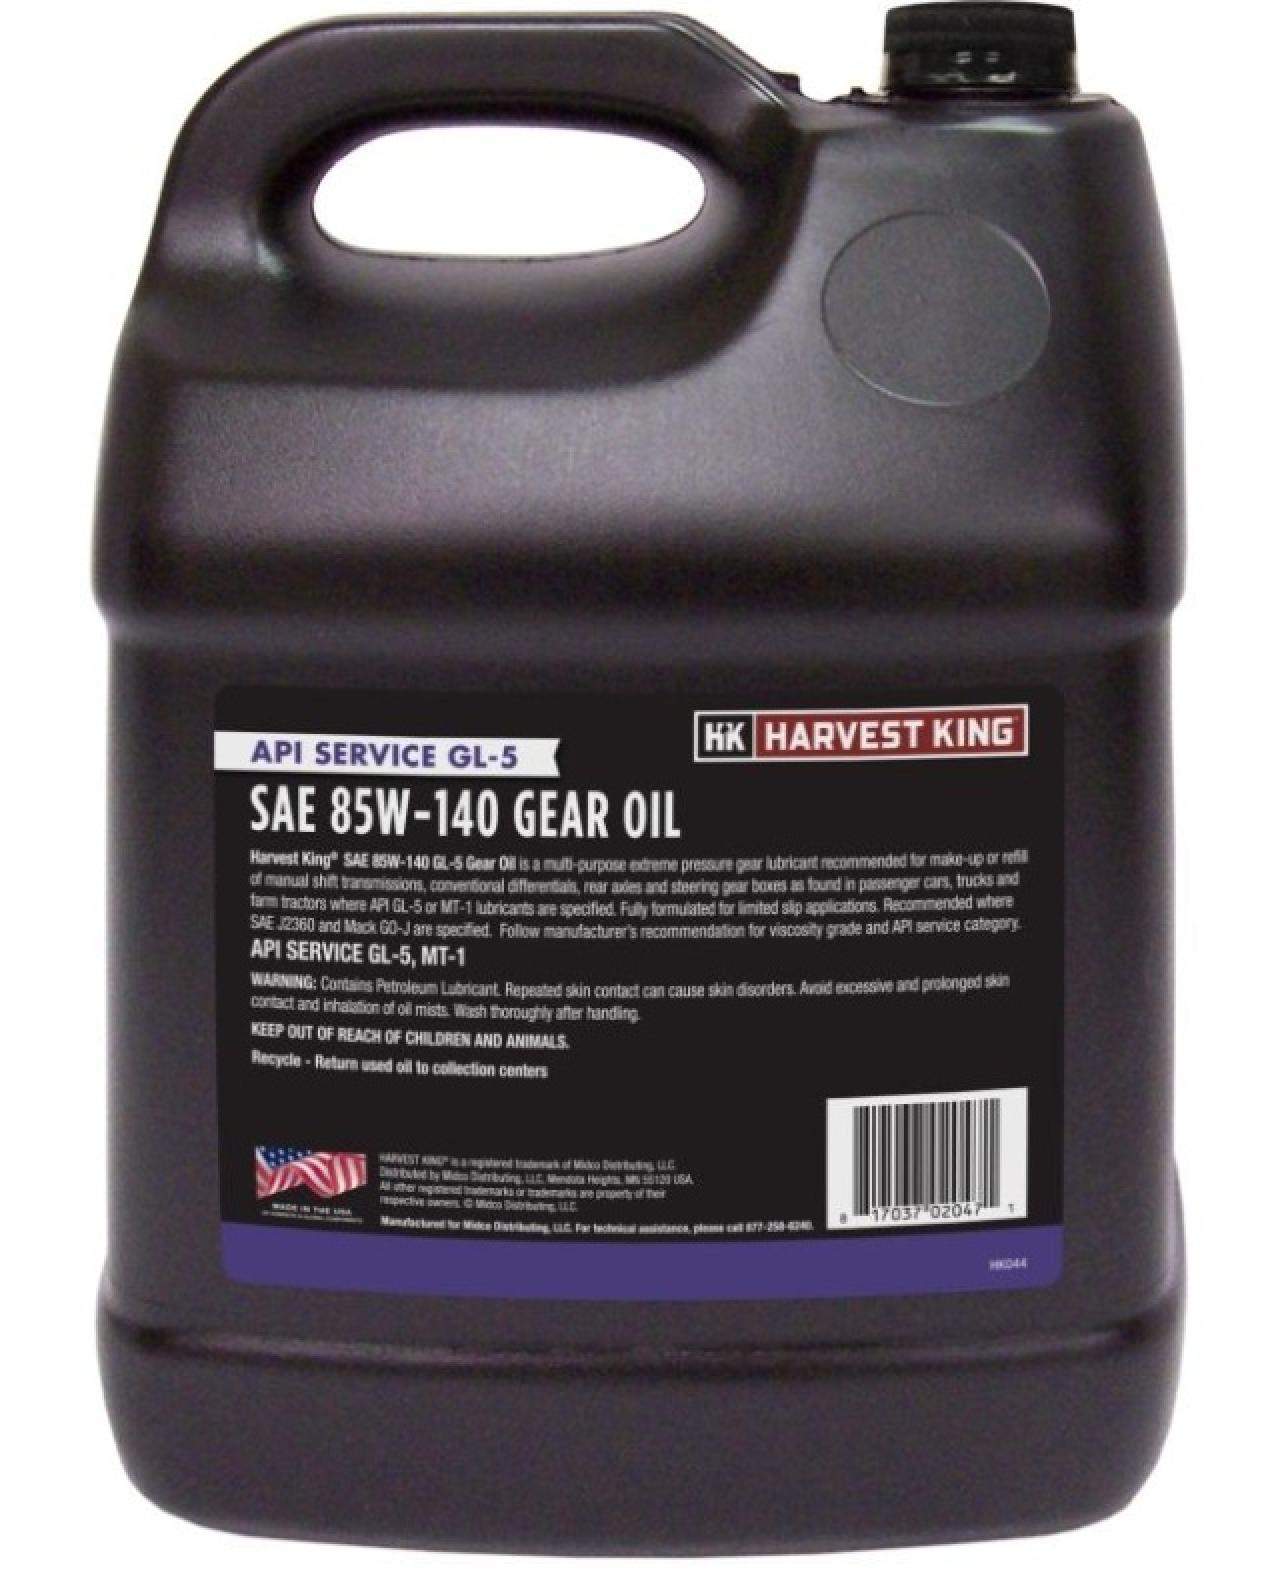 Harvest King API Service GL-5 SAE 85W-140 Gear Oil